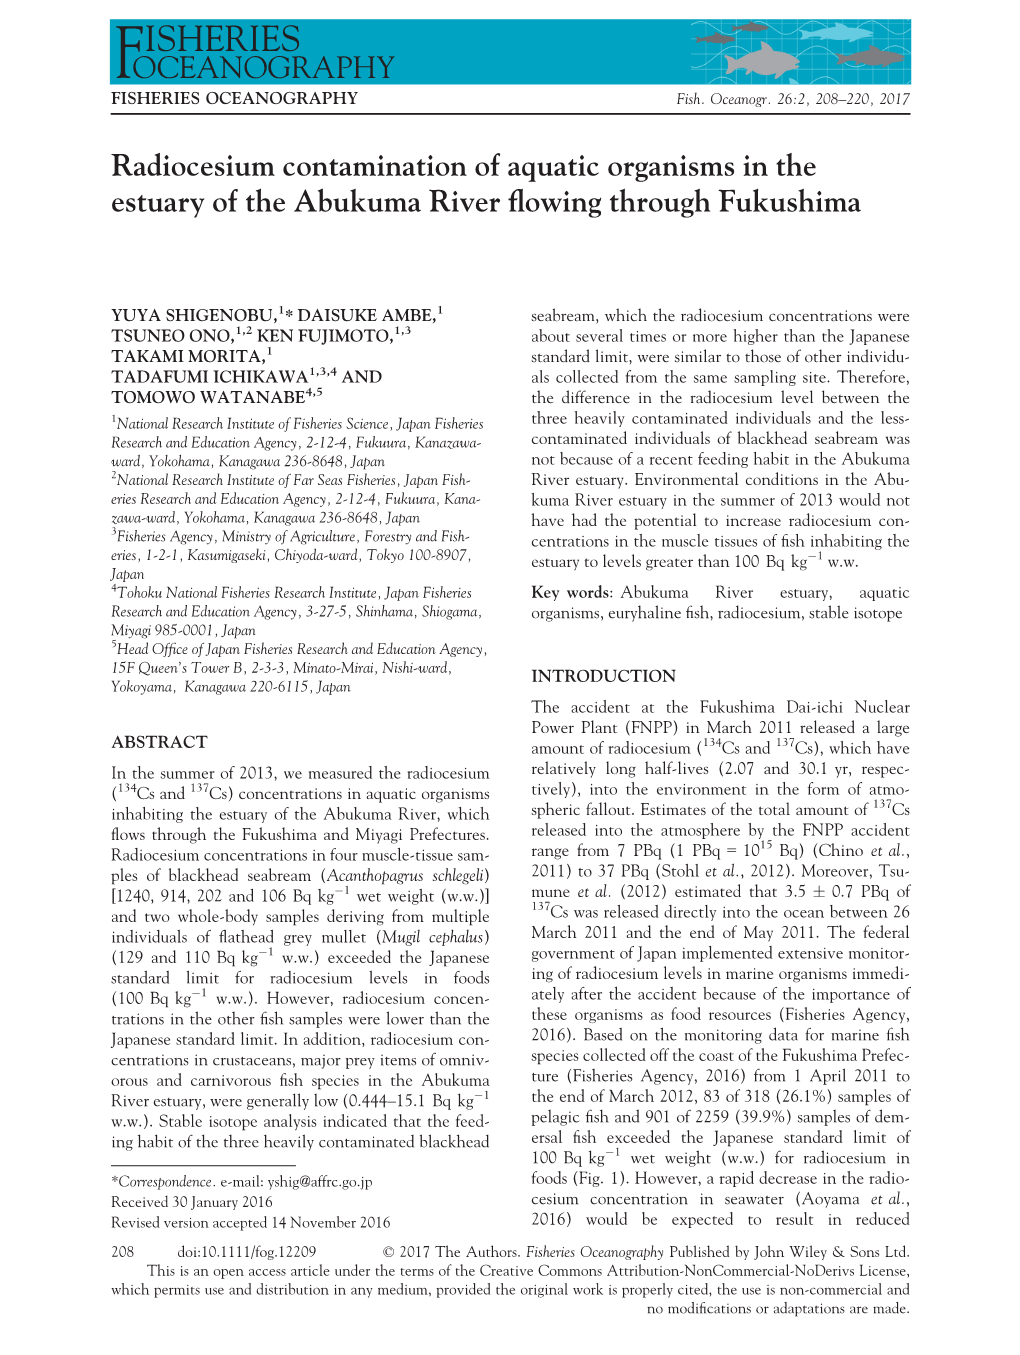 Radiocesium Contamination of Aquatic Organisms in the Estuary of the Abukuma River ﬂowing Through Fukushima